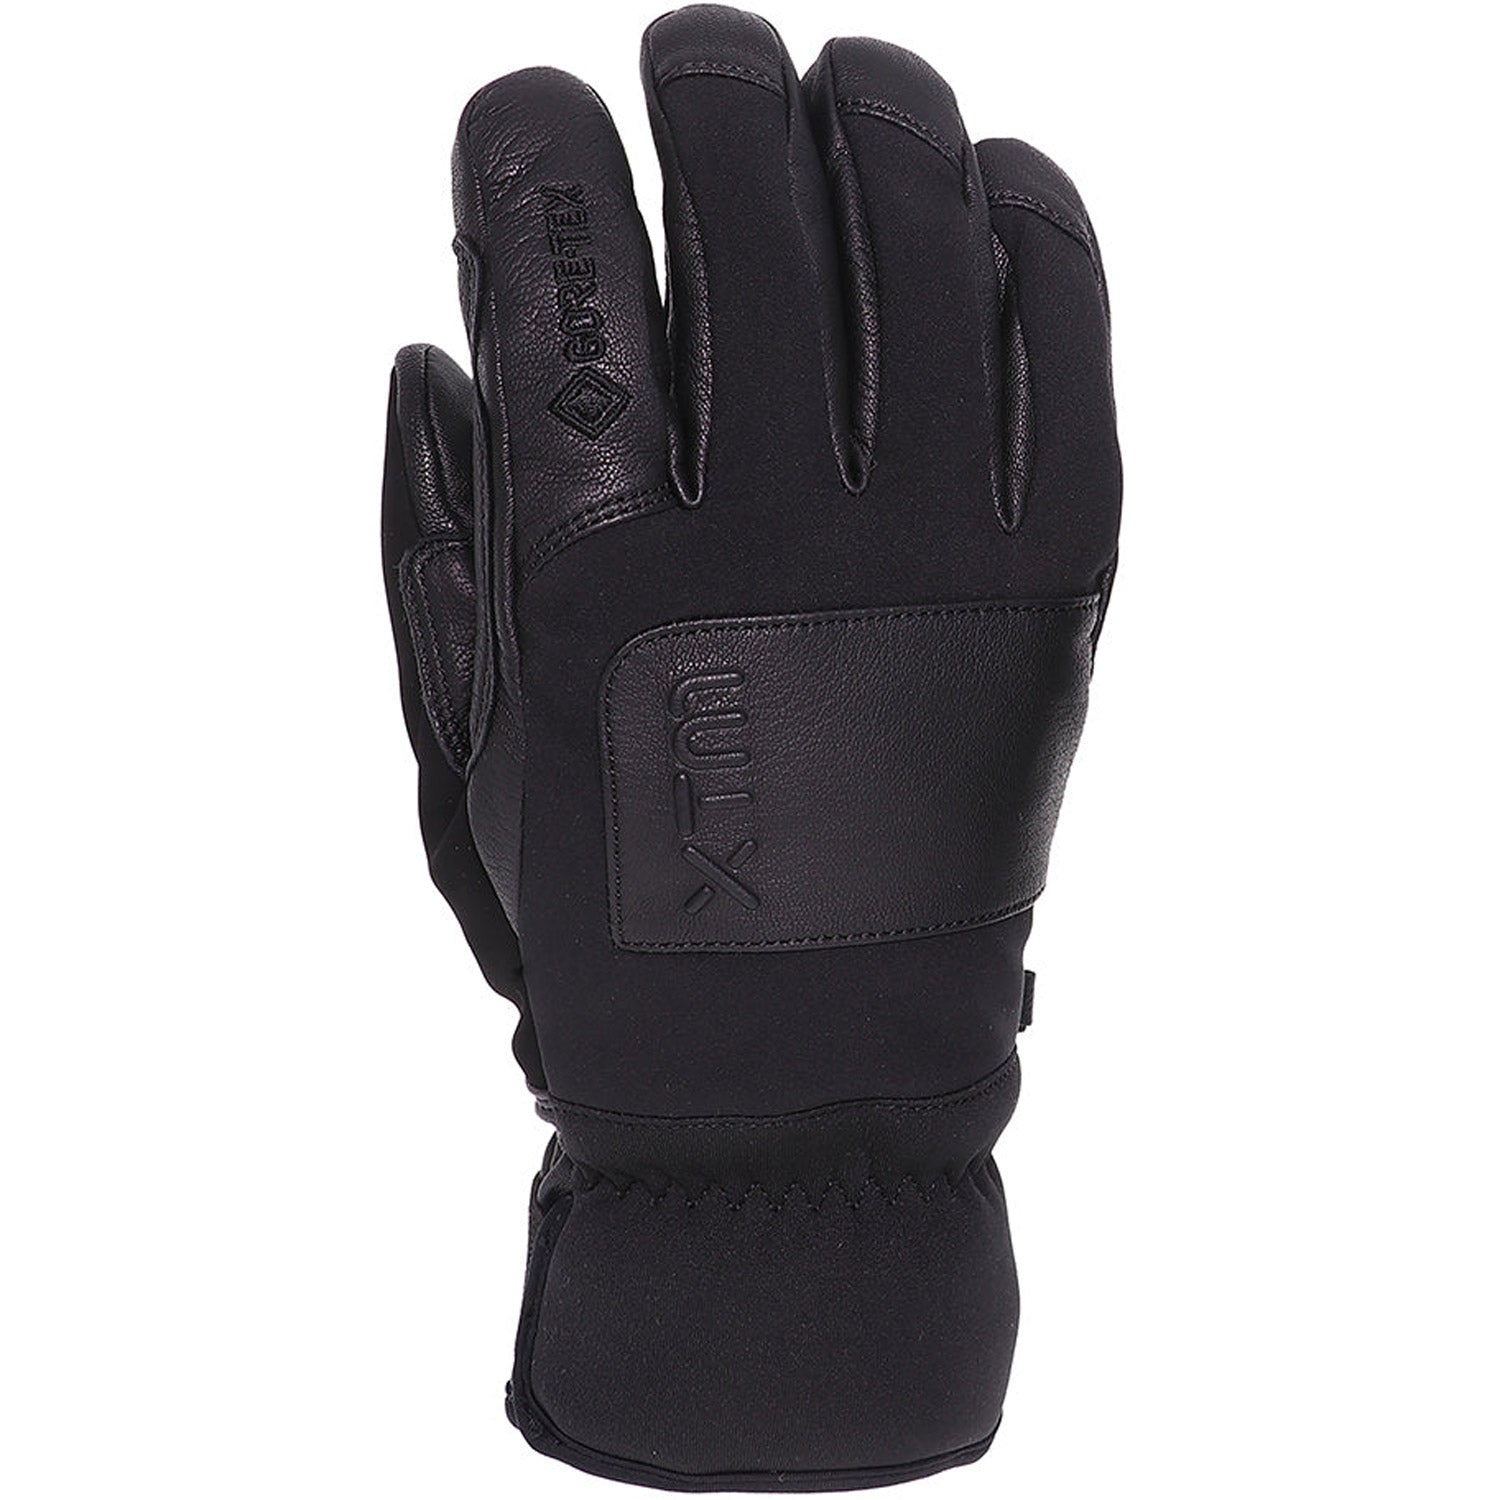 Patrol GORE-TEX Unisex Snow Glove